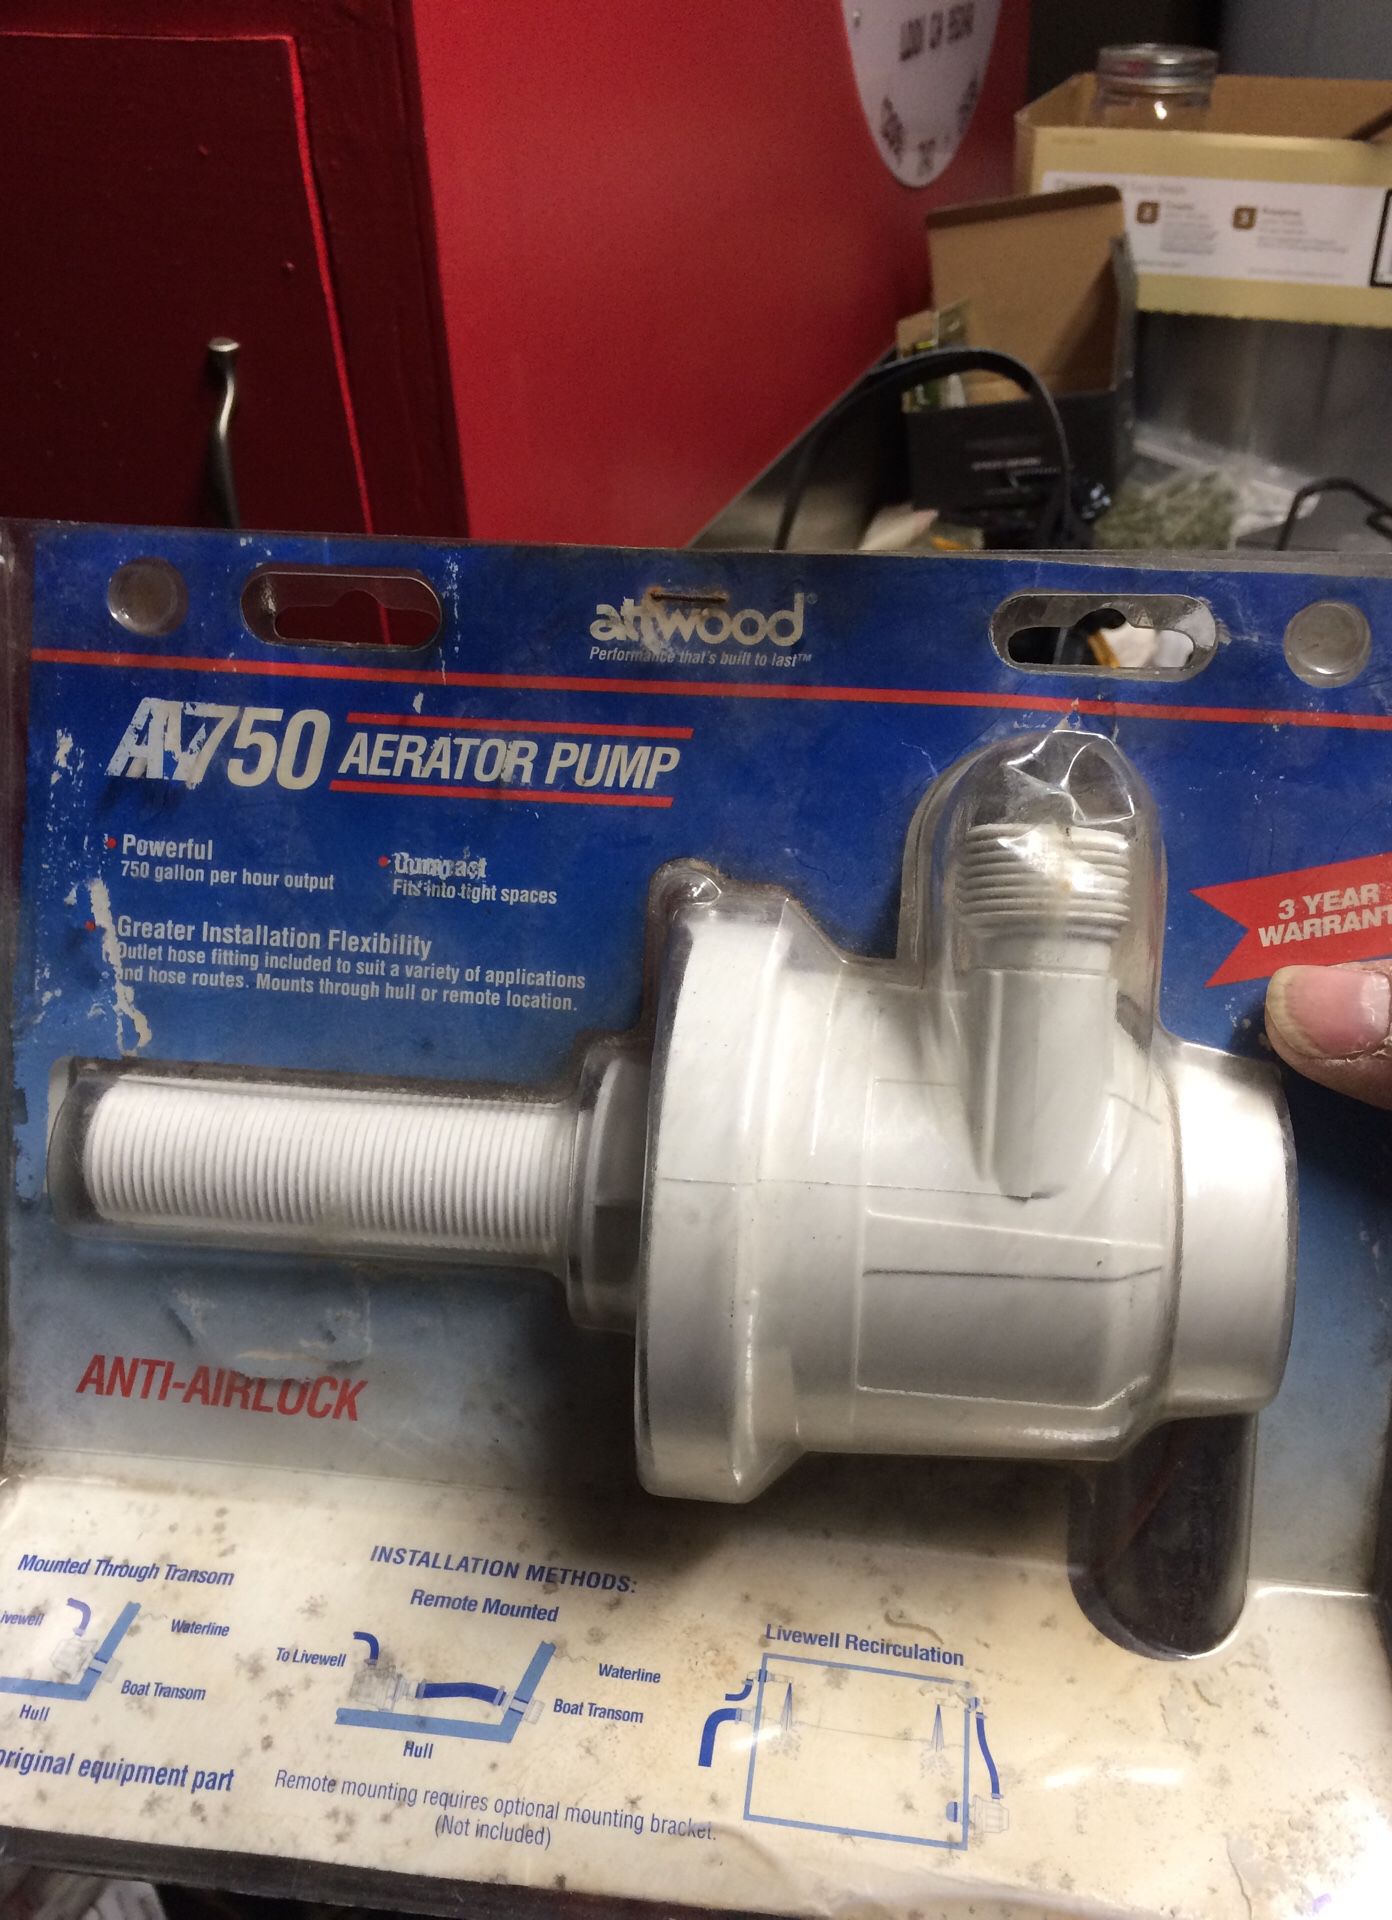 Atwood a 750 aerator pump